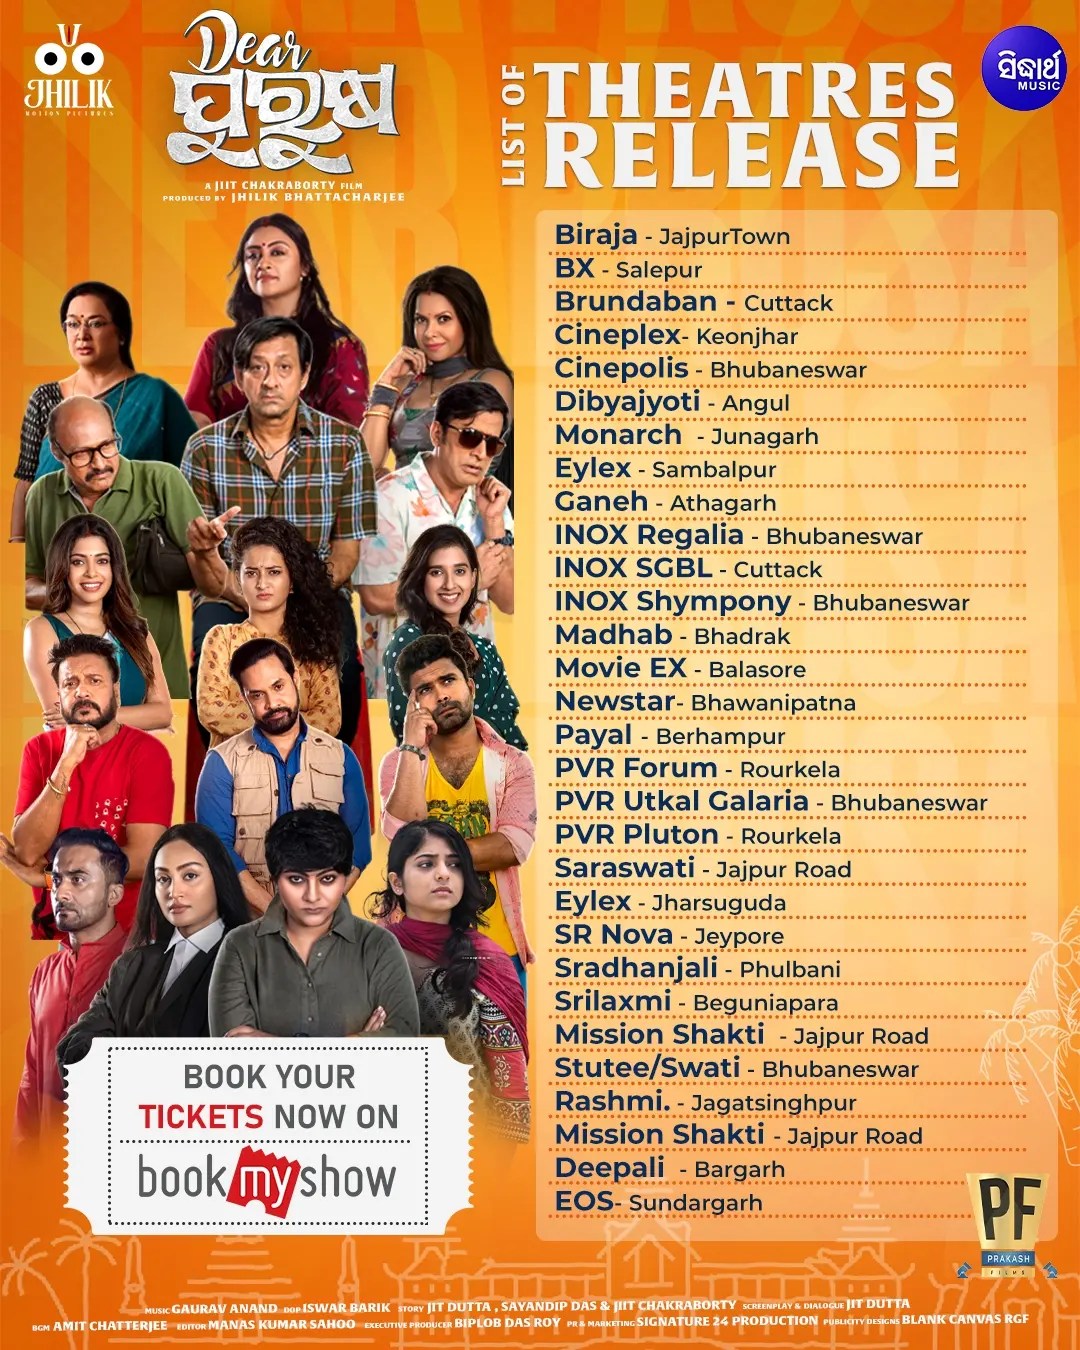 'Dear Purusha' release theatre list